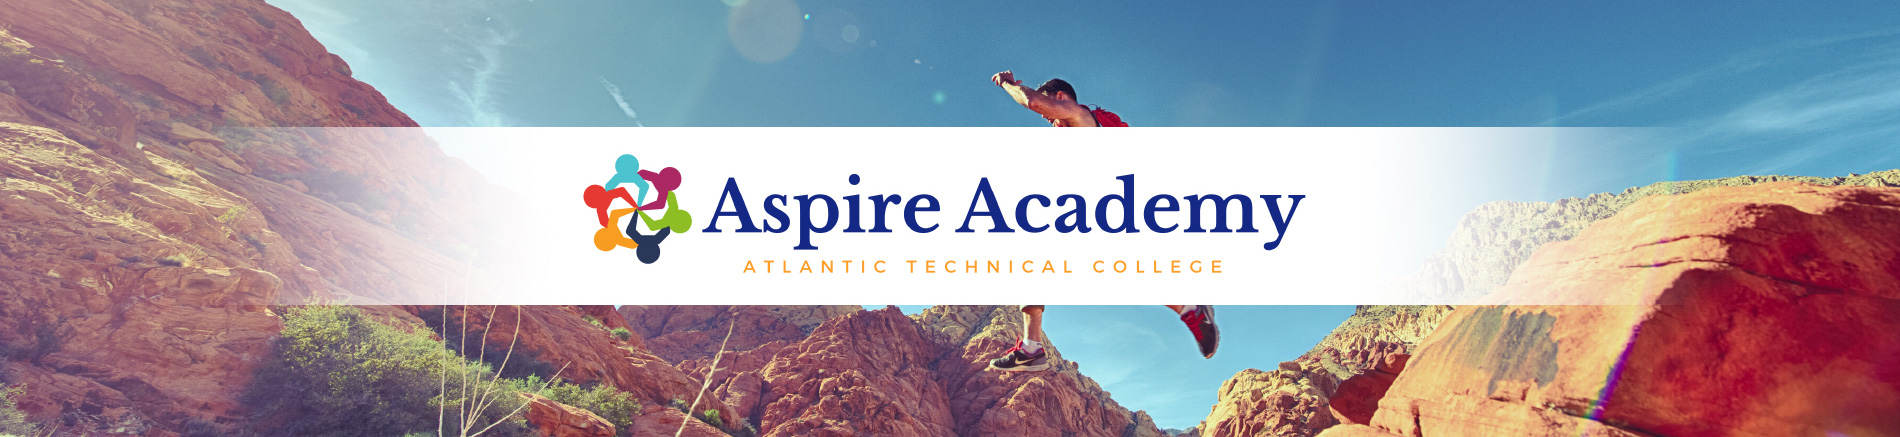 aspire academy header image